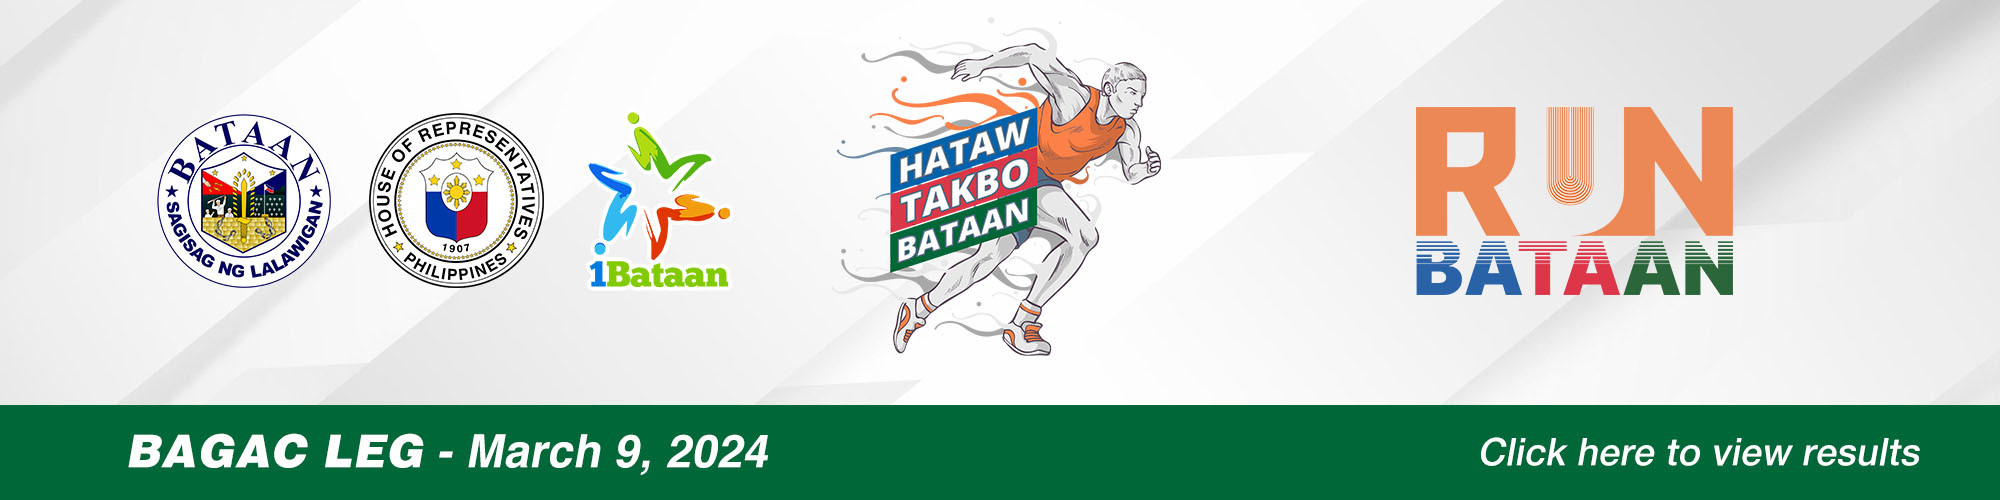 Hataw Takbo Bataan 2024 Bagac Leg